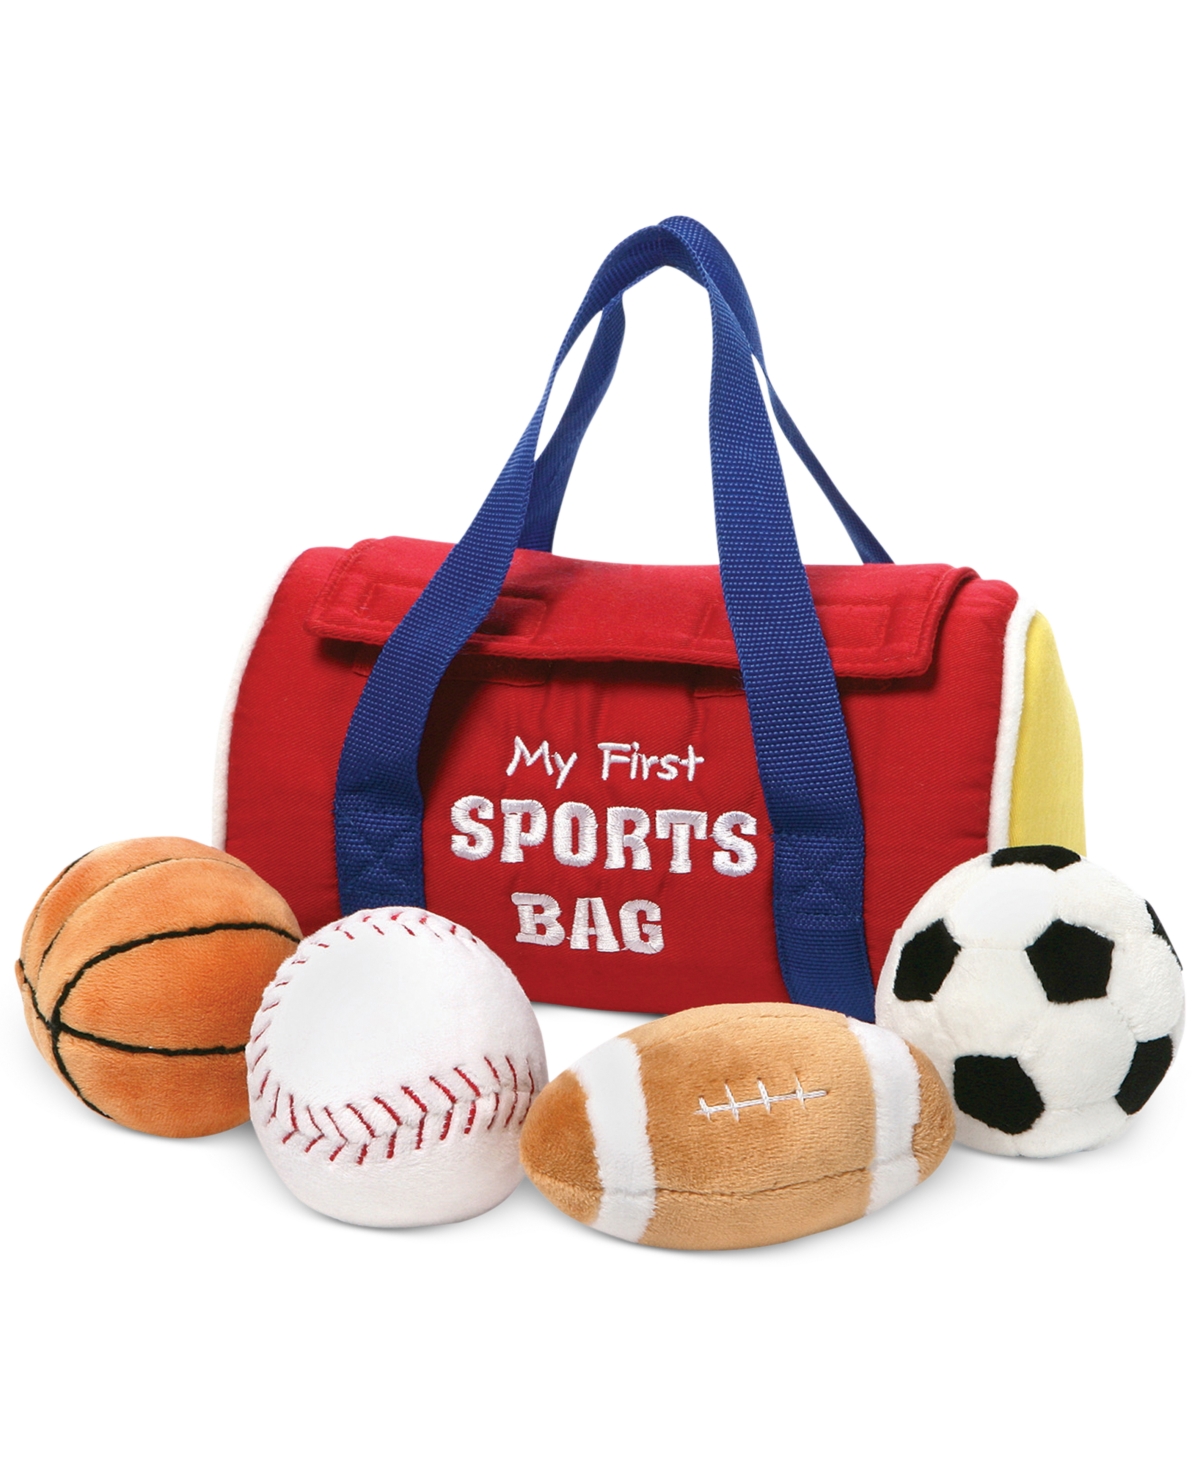 Gund Baby My First Sports Bag Plush Playset Toy - Sports Bag